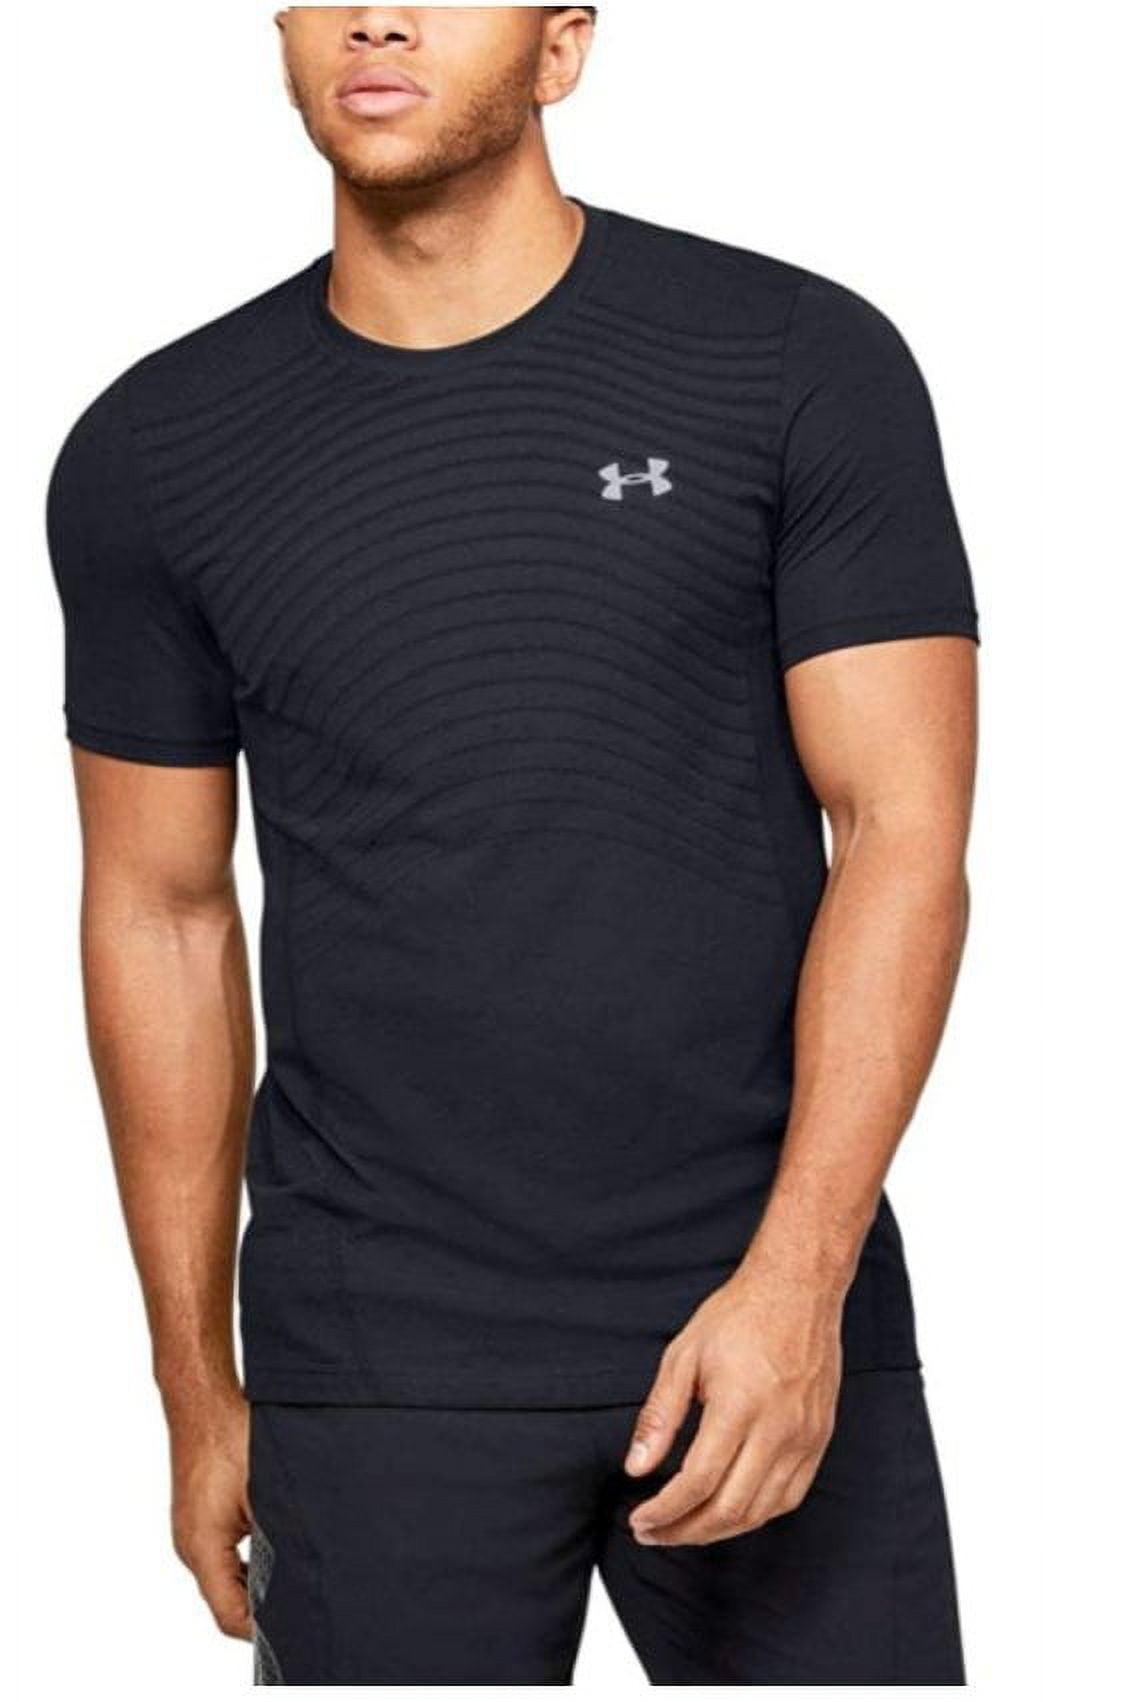 Under Armour Men's Seamless Novelty Short Sleeve T-Shirt, Black, Large 